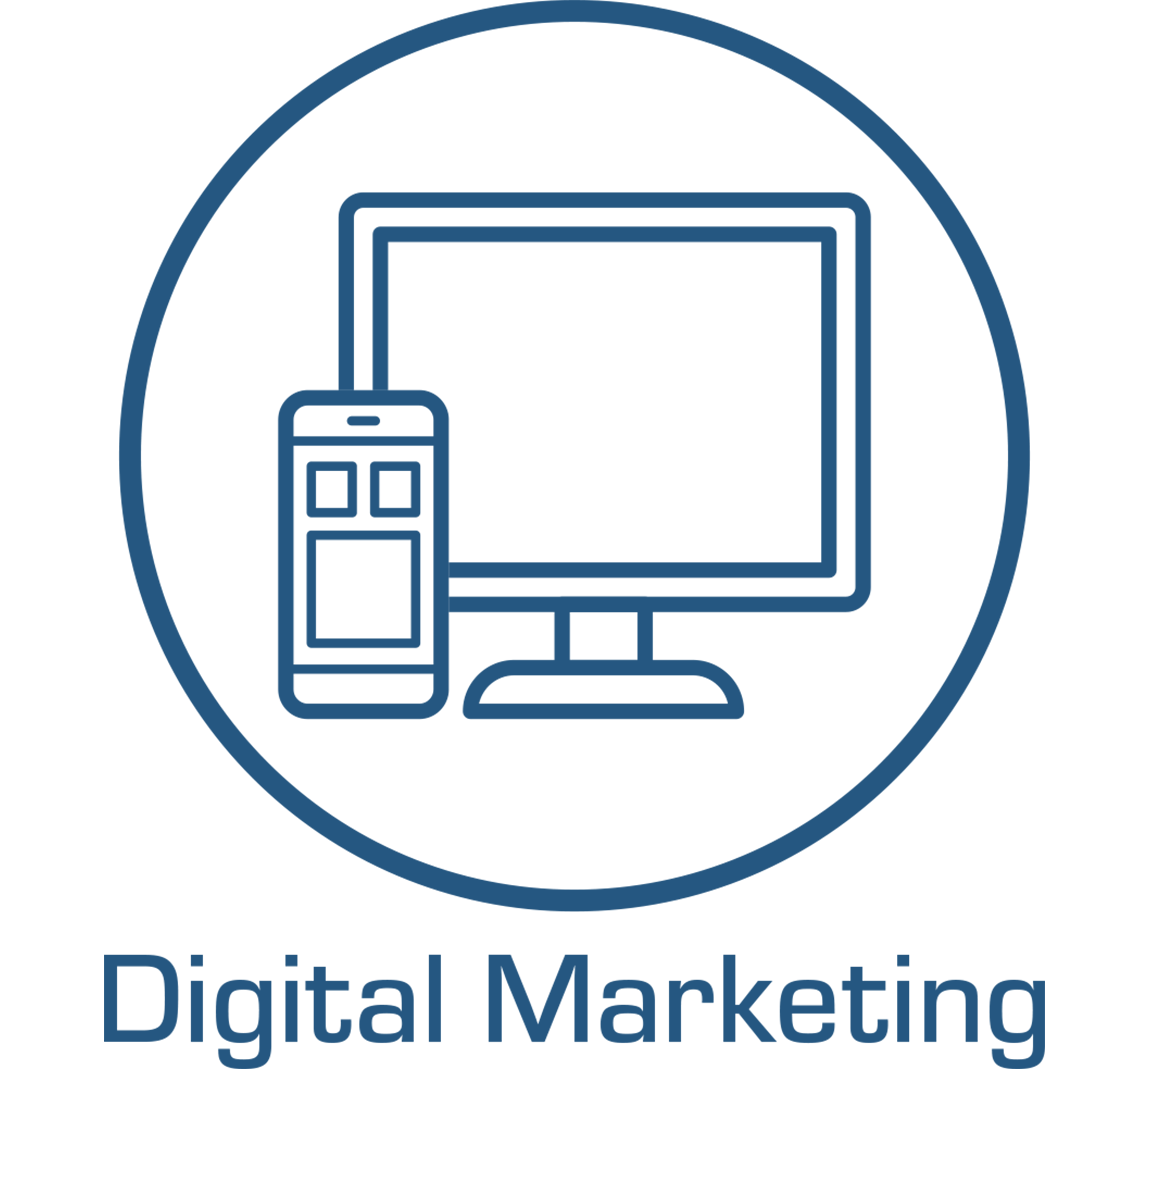 digital marketing badge